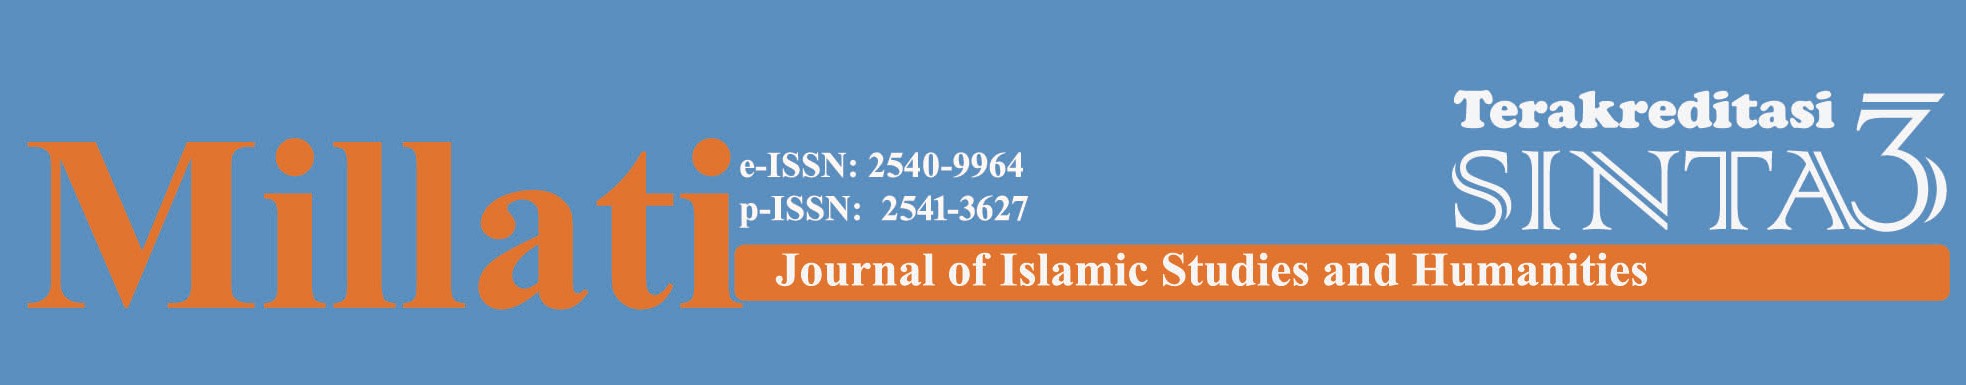 millati journal of islamic studies and humanities